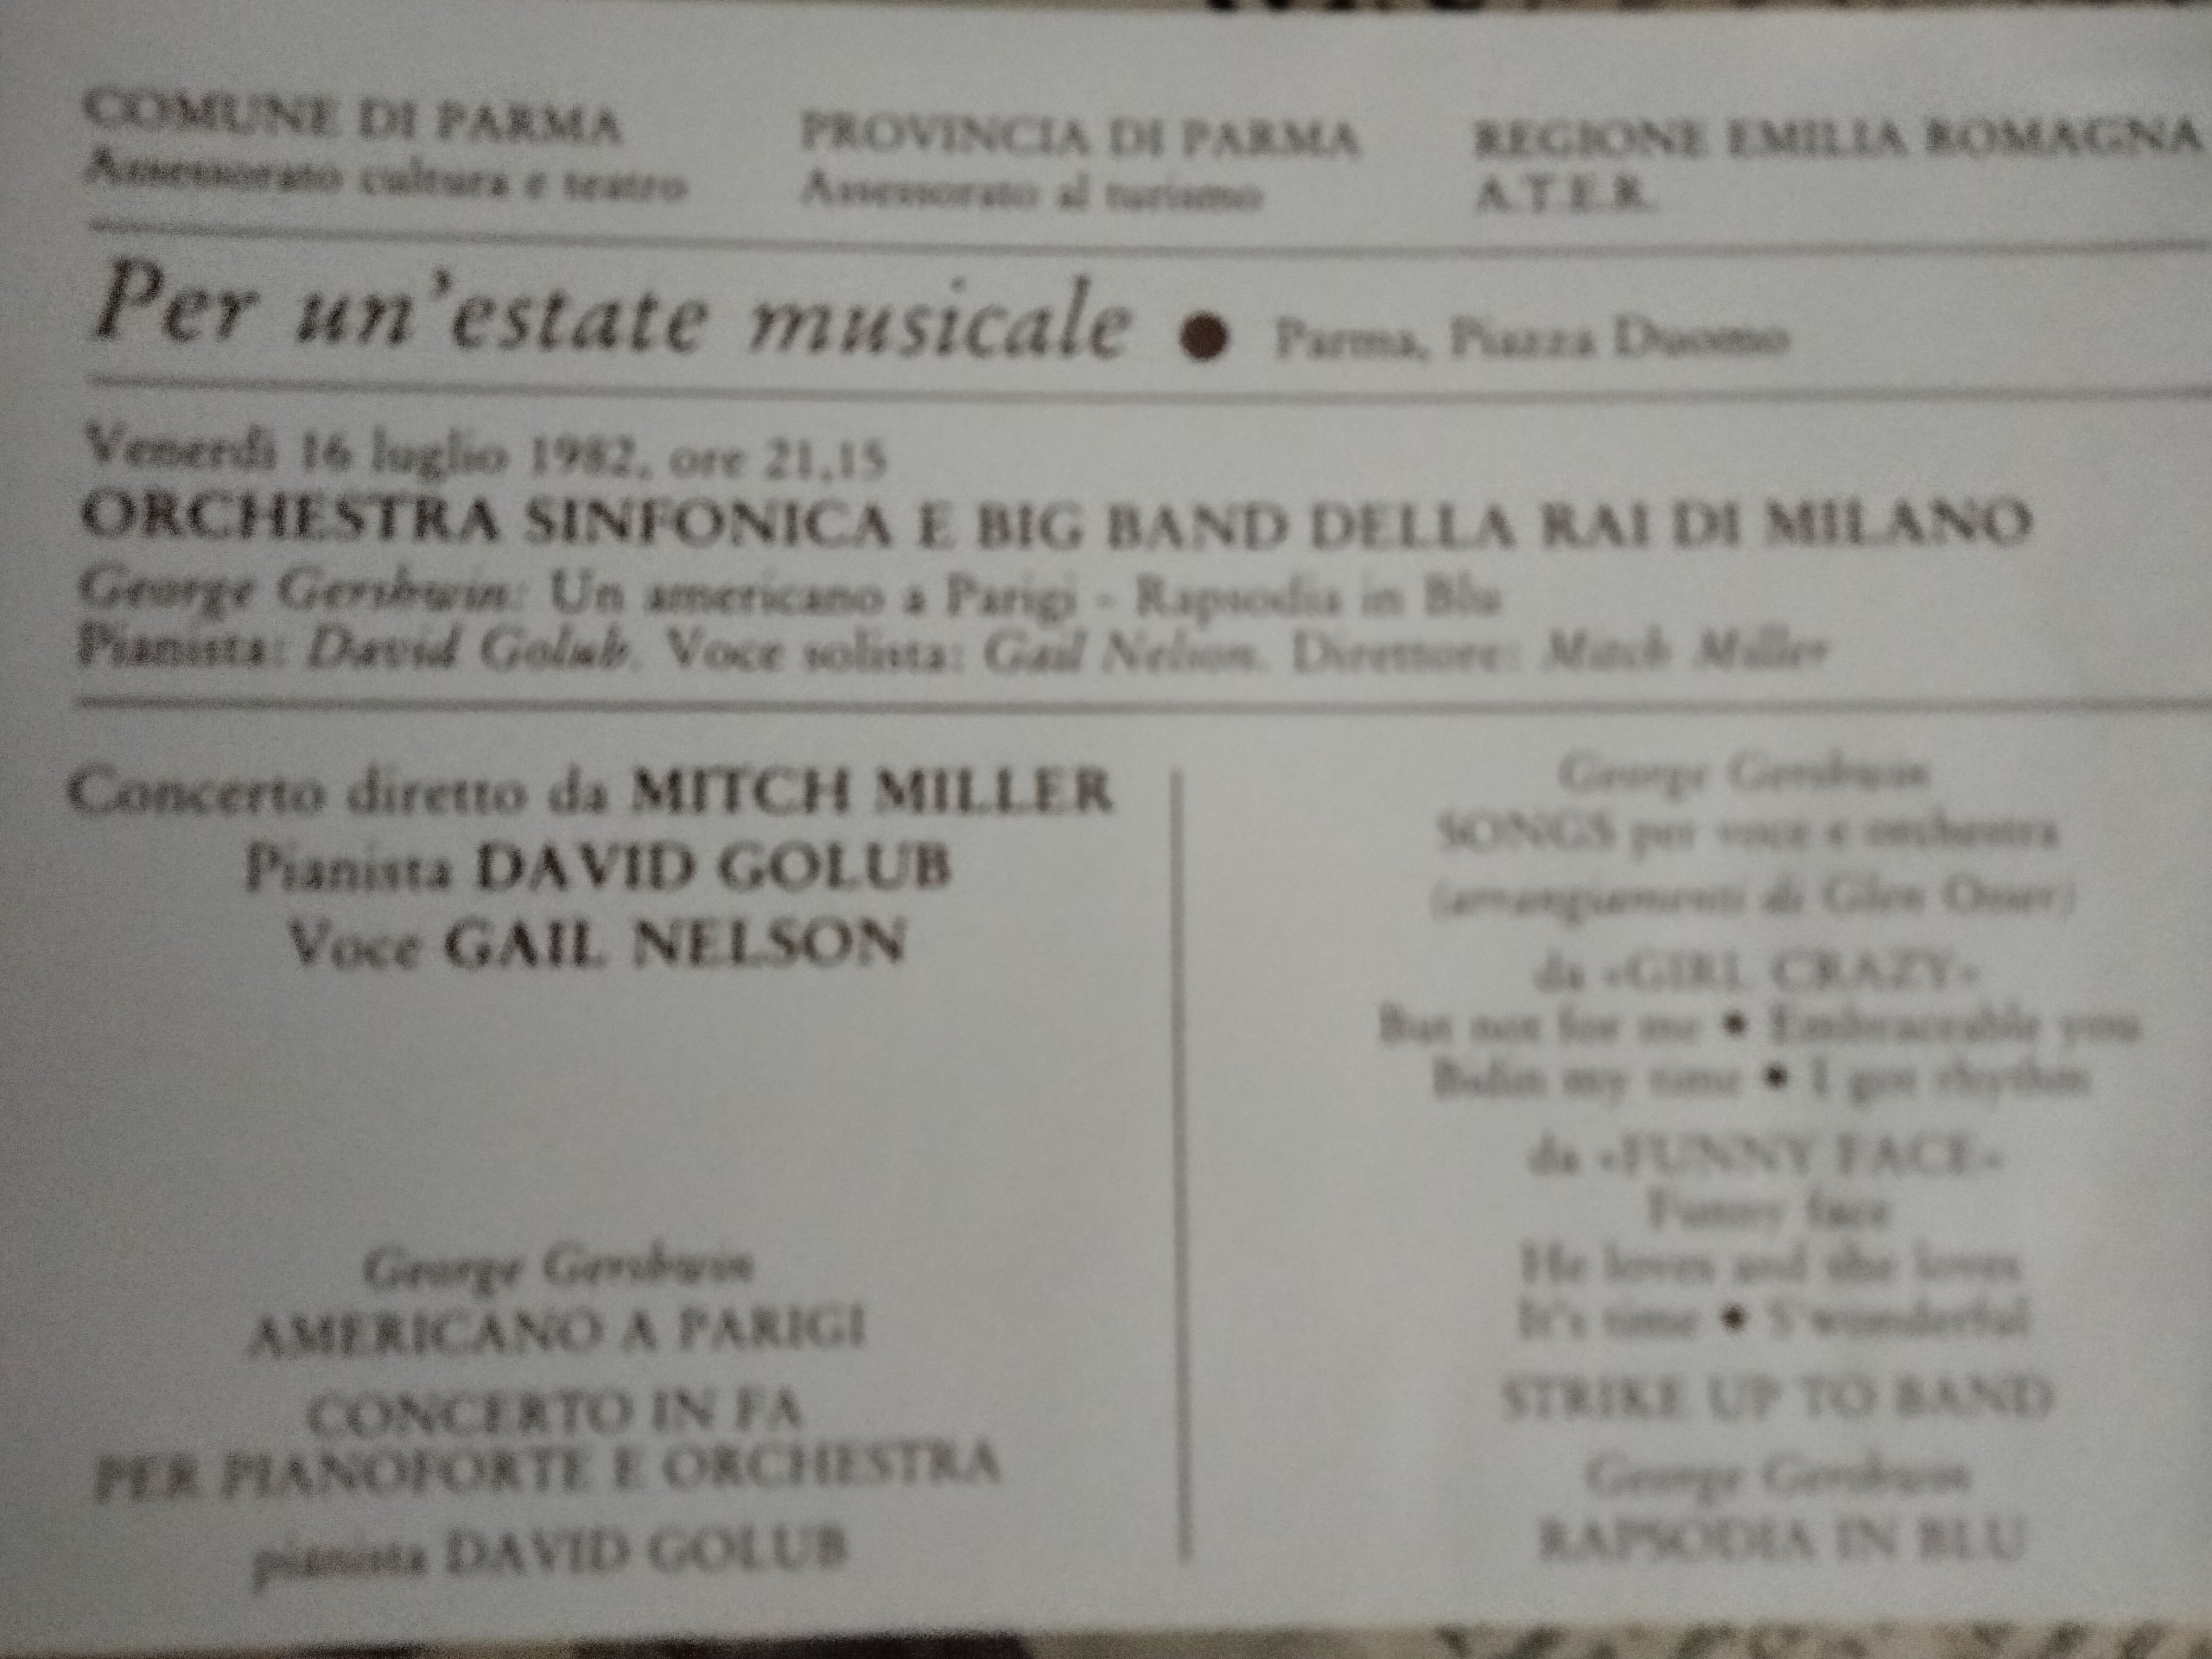 Rai Symphony Orchestra of Milan ,italy in Parma